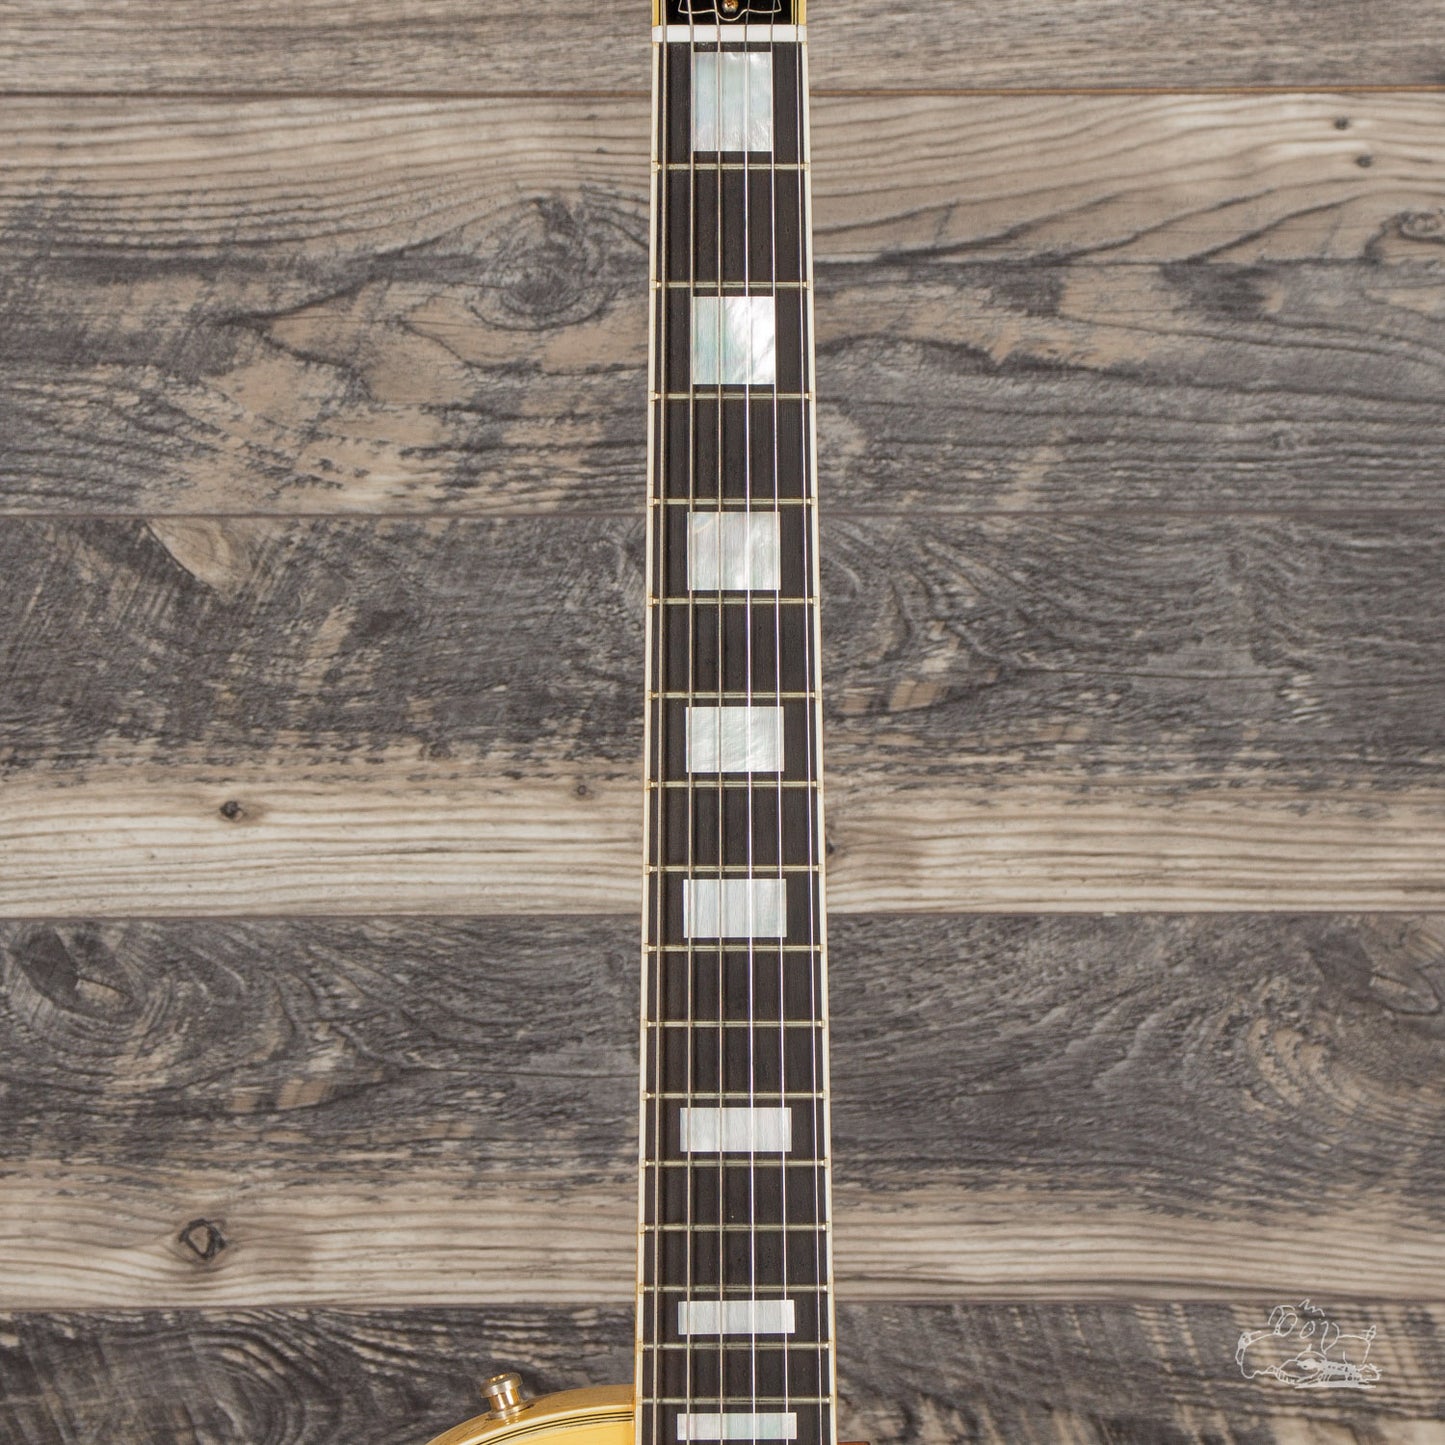 2010 Gibson Custom Shop Randy Rhoads '74 Les Paul Custom Aged